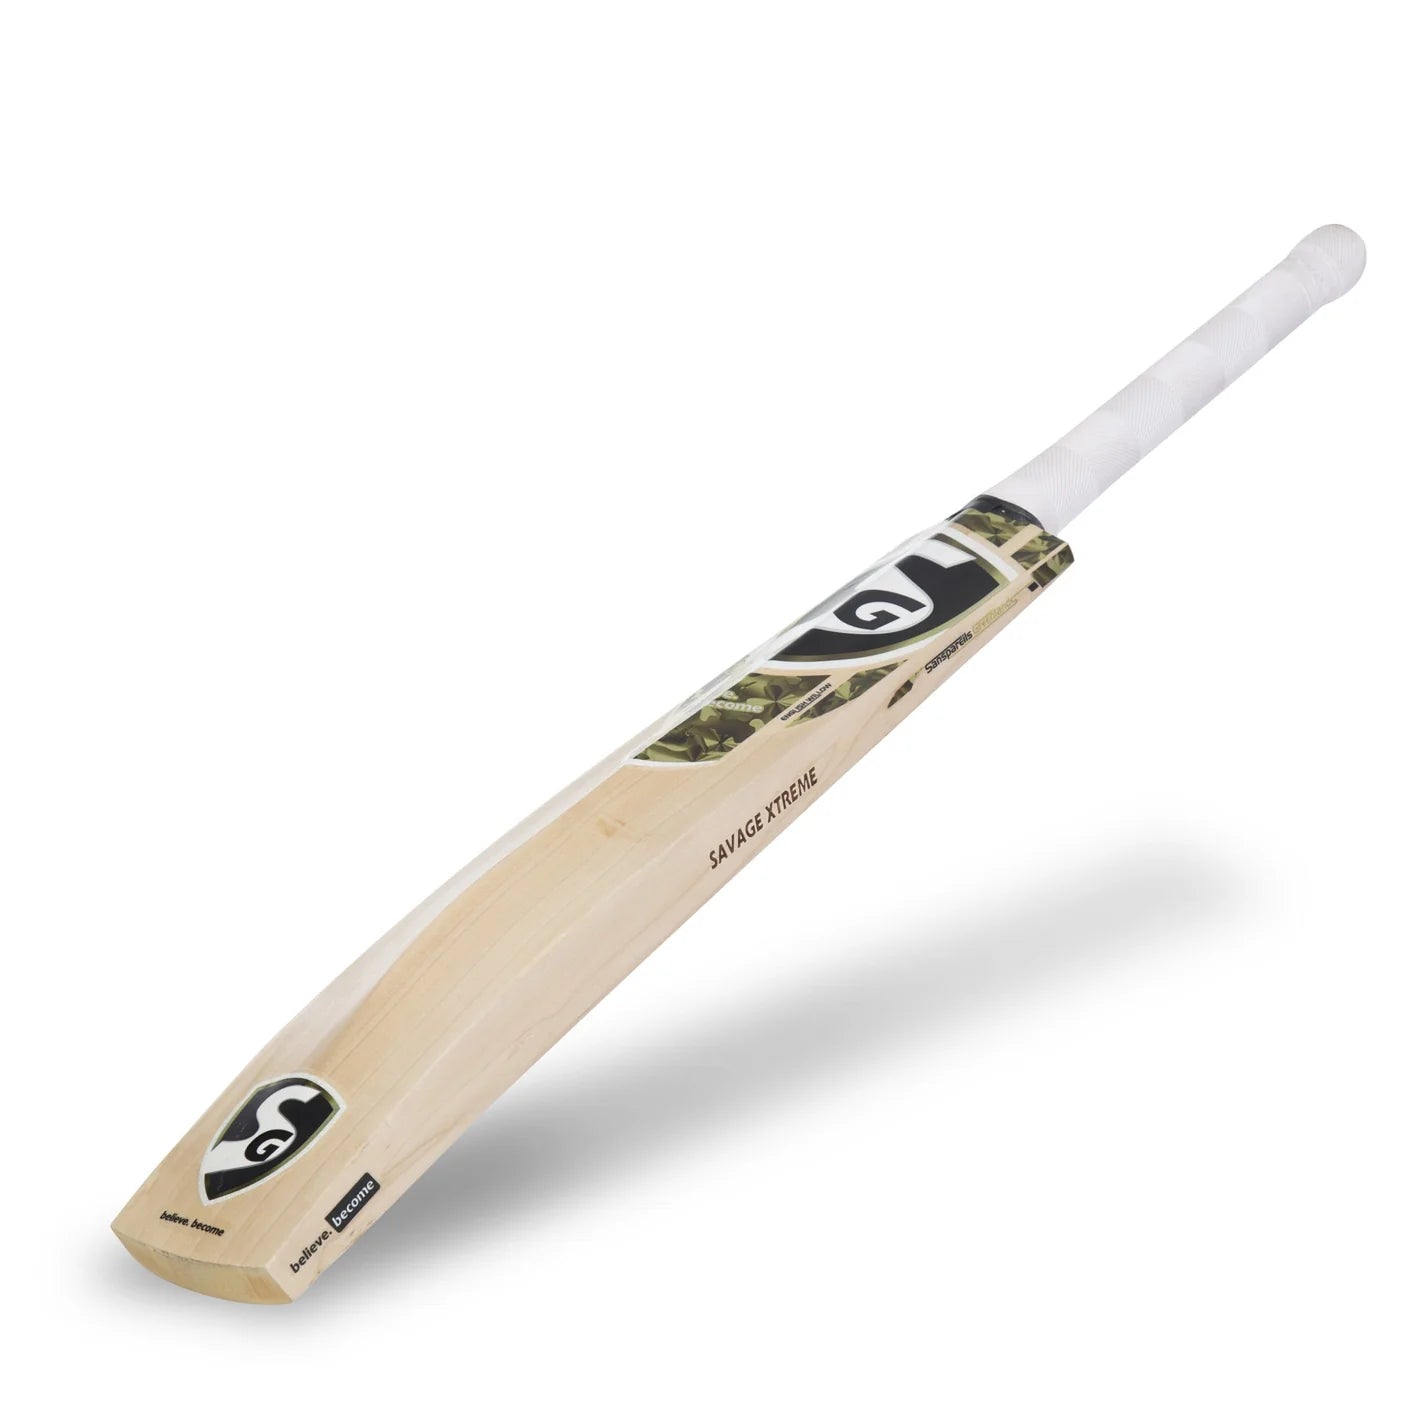 SG Savage Xtreme Finest English Willow grade 3 Cricket Bat